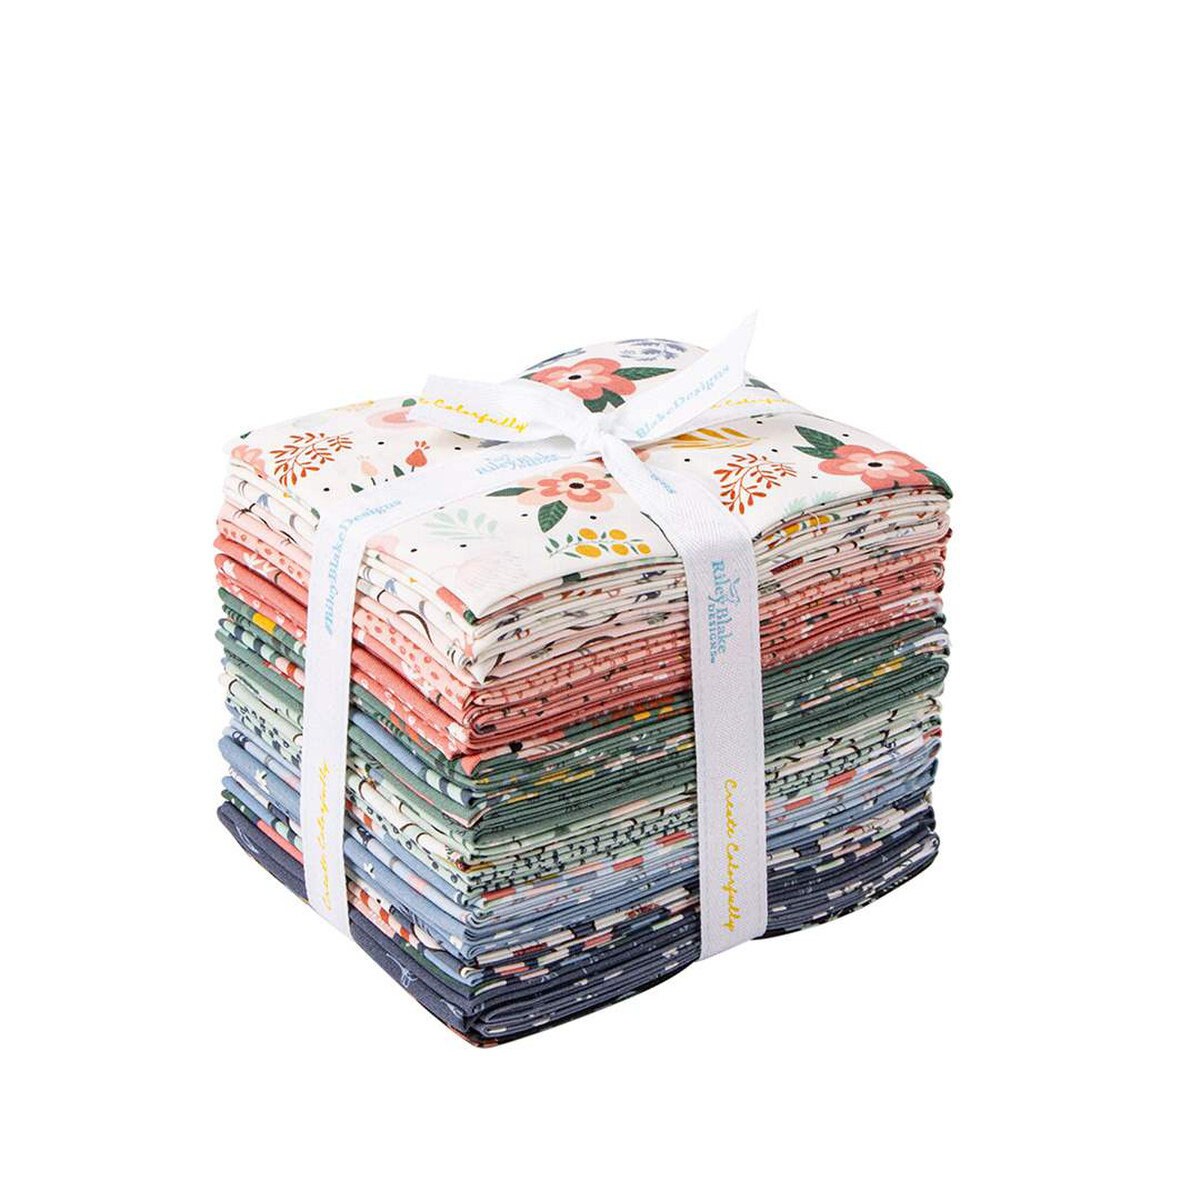 8pcs Precut Fat Quarters Cotton Fabric Bundles - Animal Theme Fabric - DIY  Crafting Series - 100% Cotton - Eco-Friendly – 8pcs Printed Fabric - 18x22